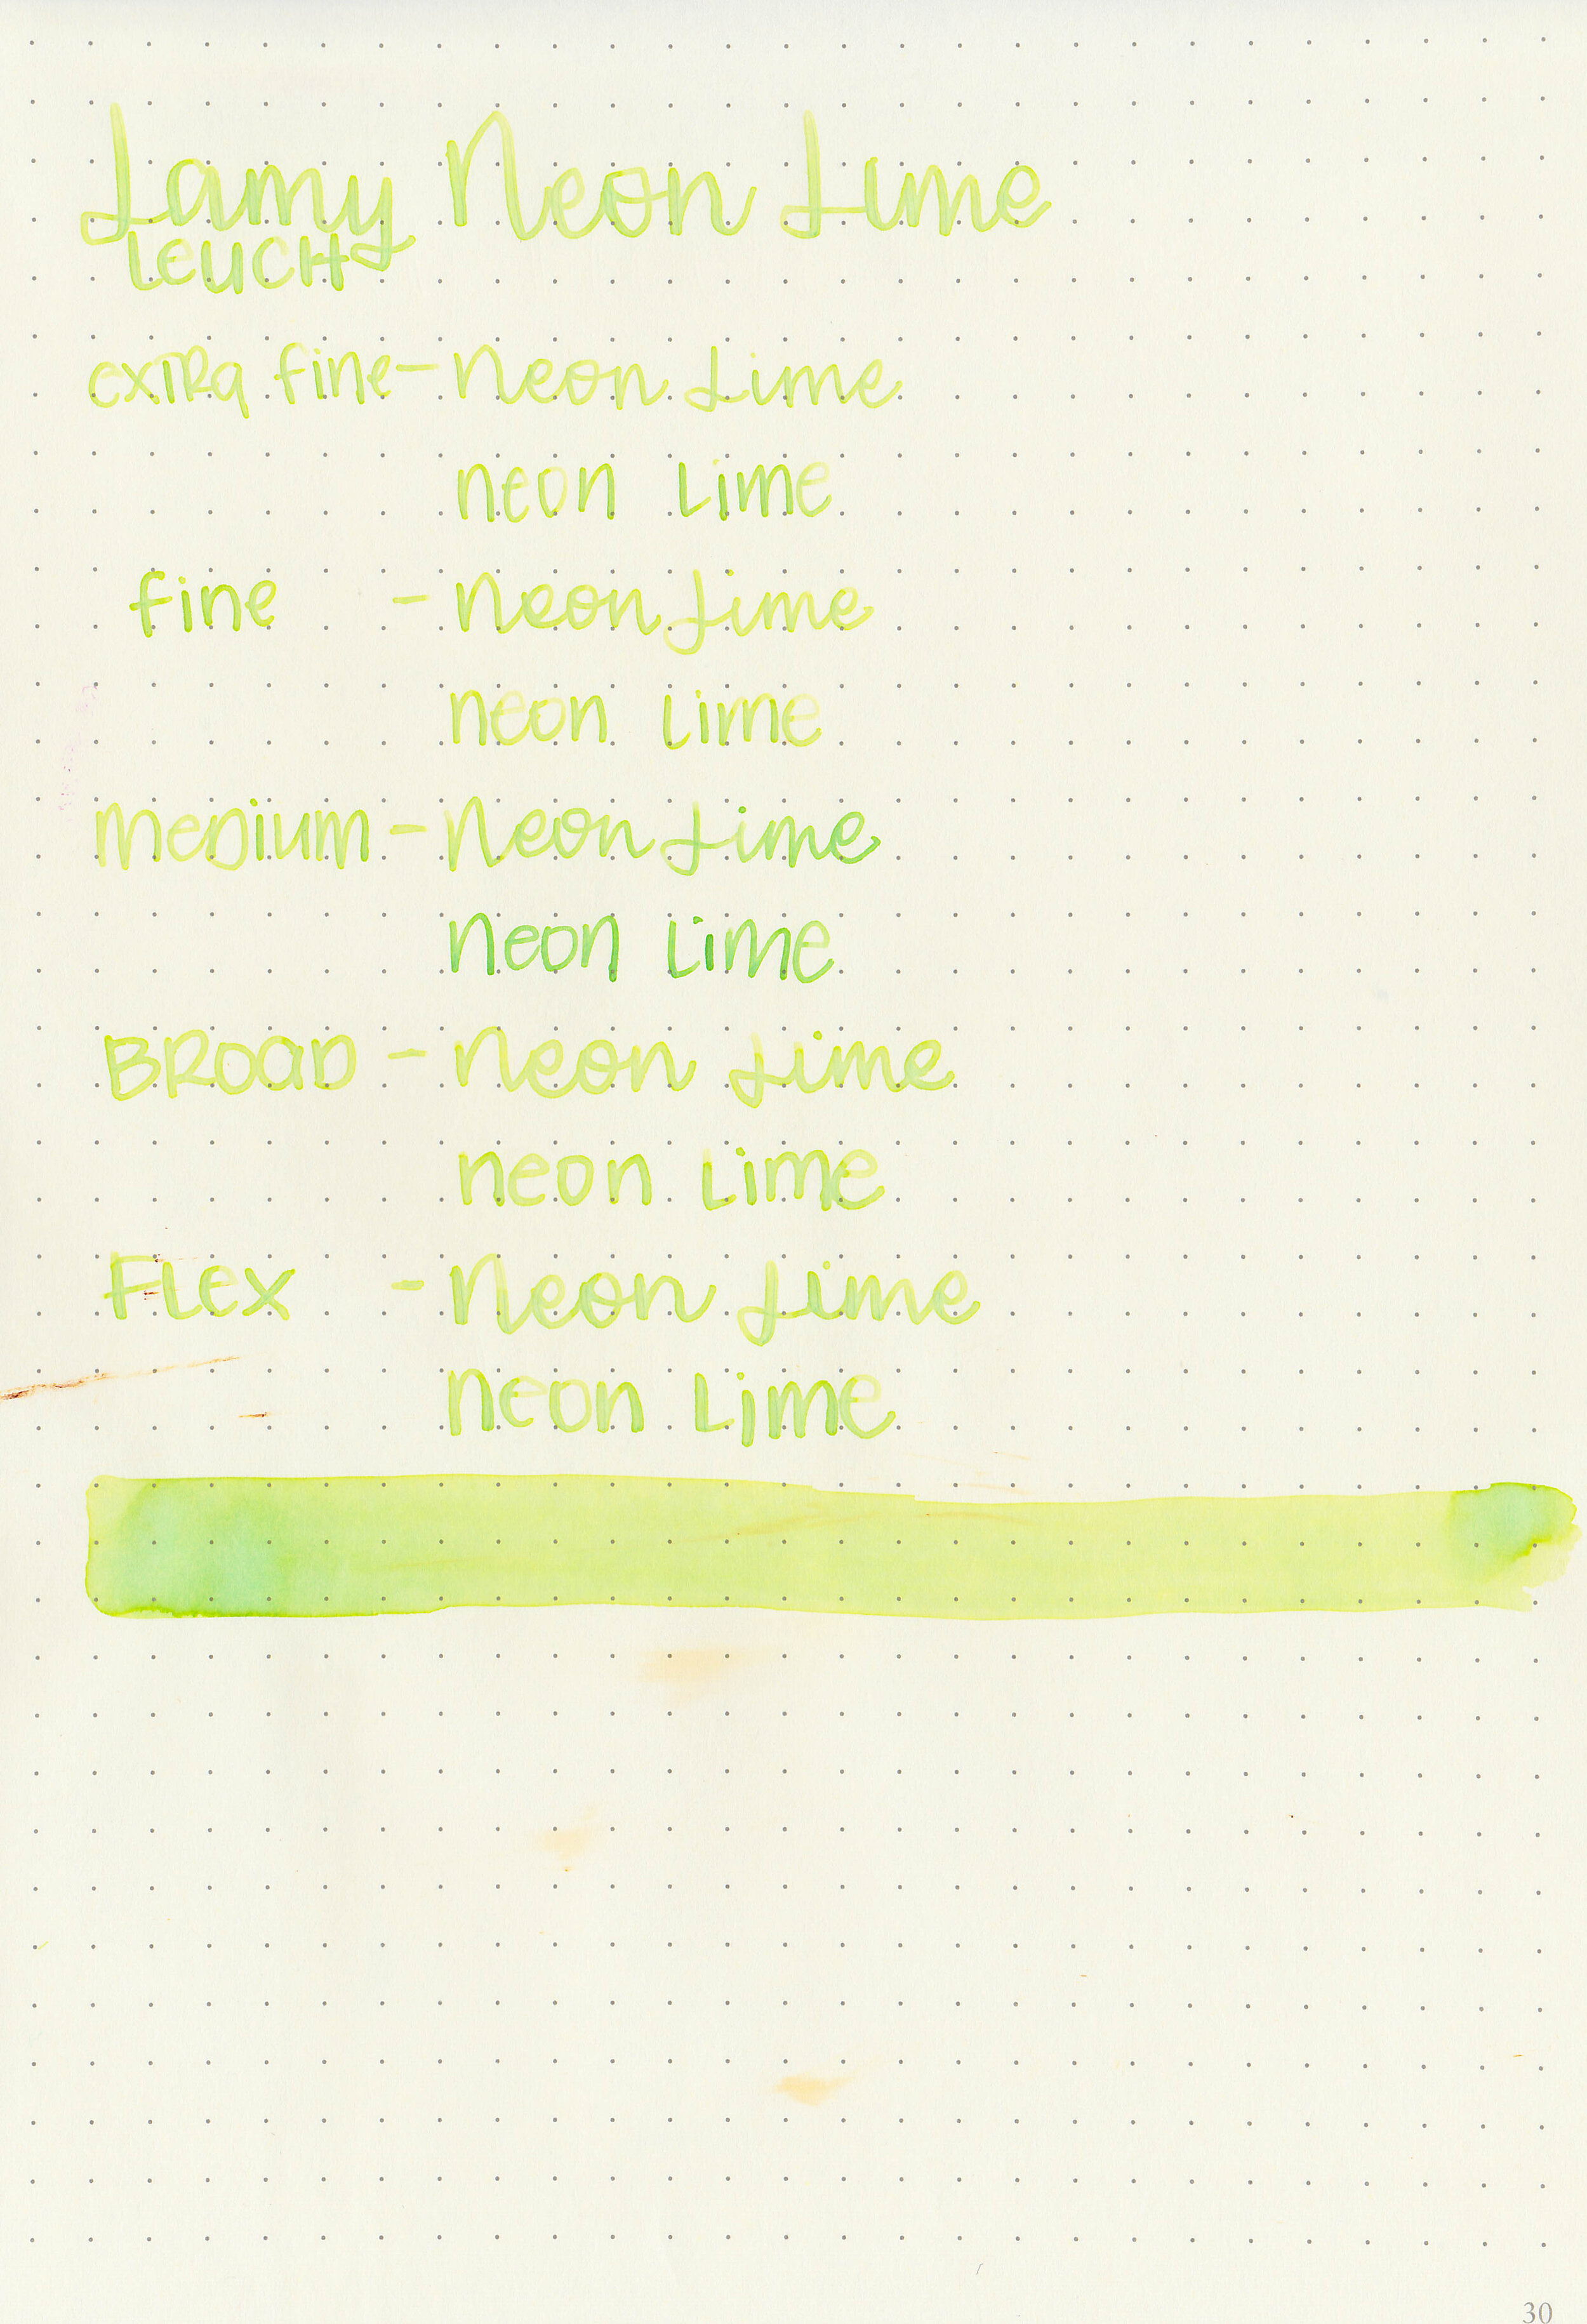 lmy-neon-lime-9.jpg